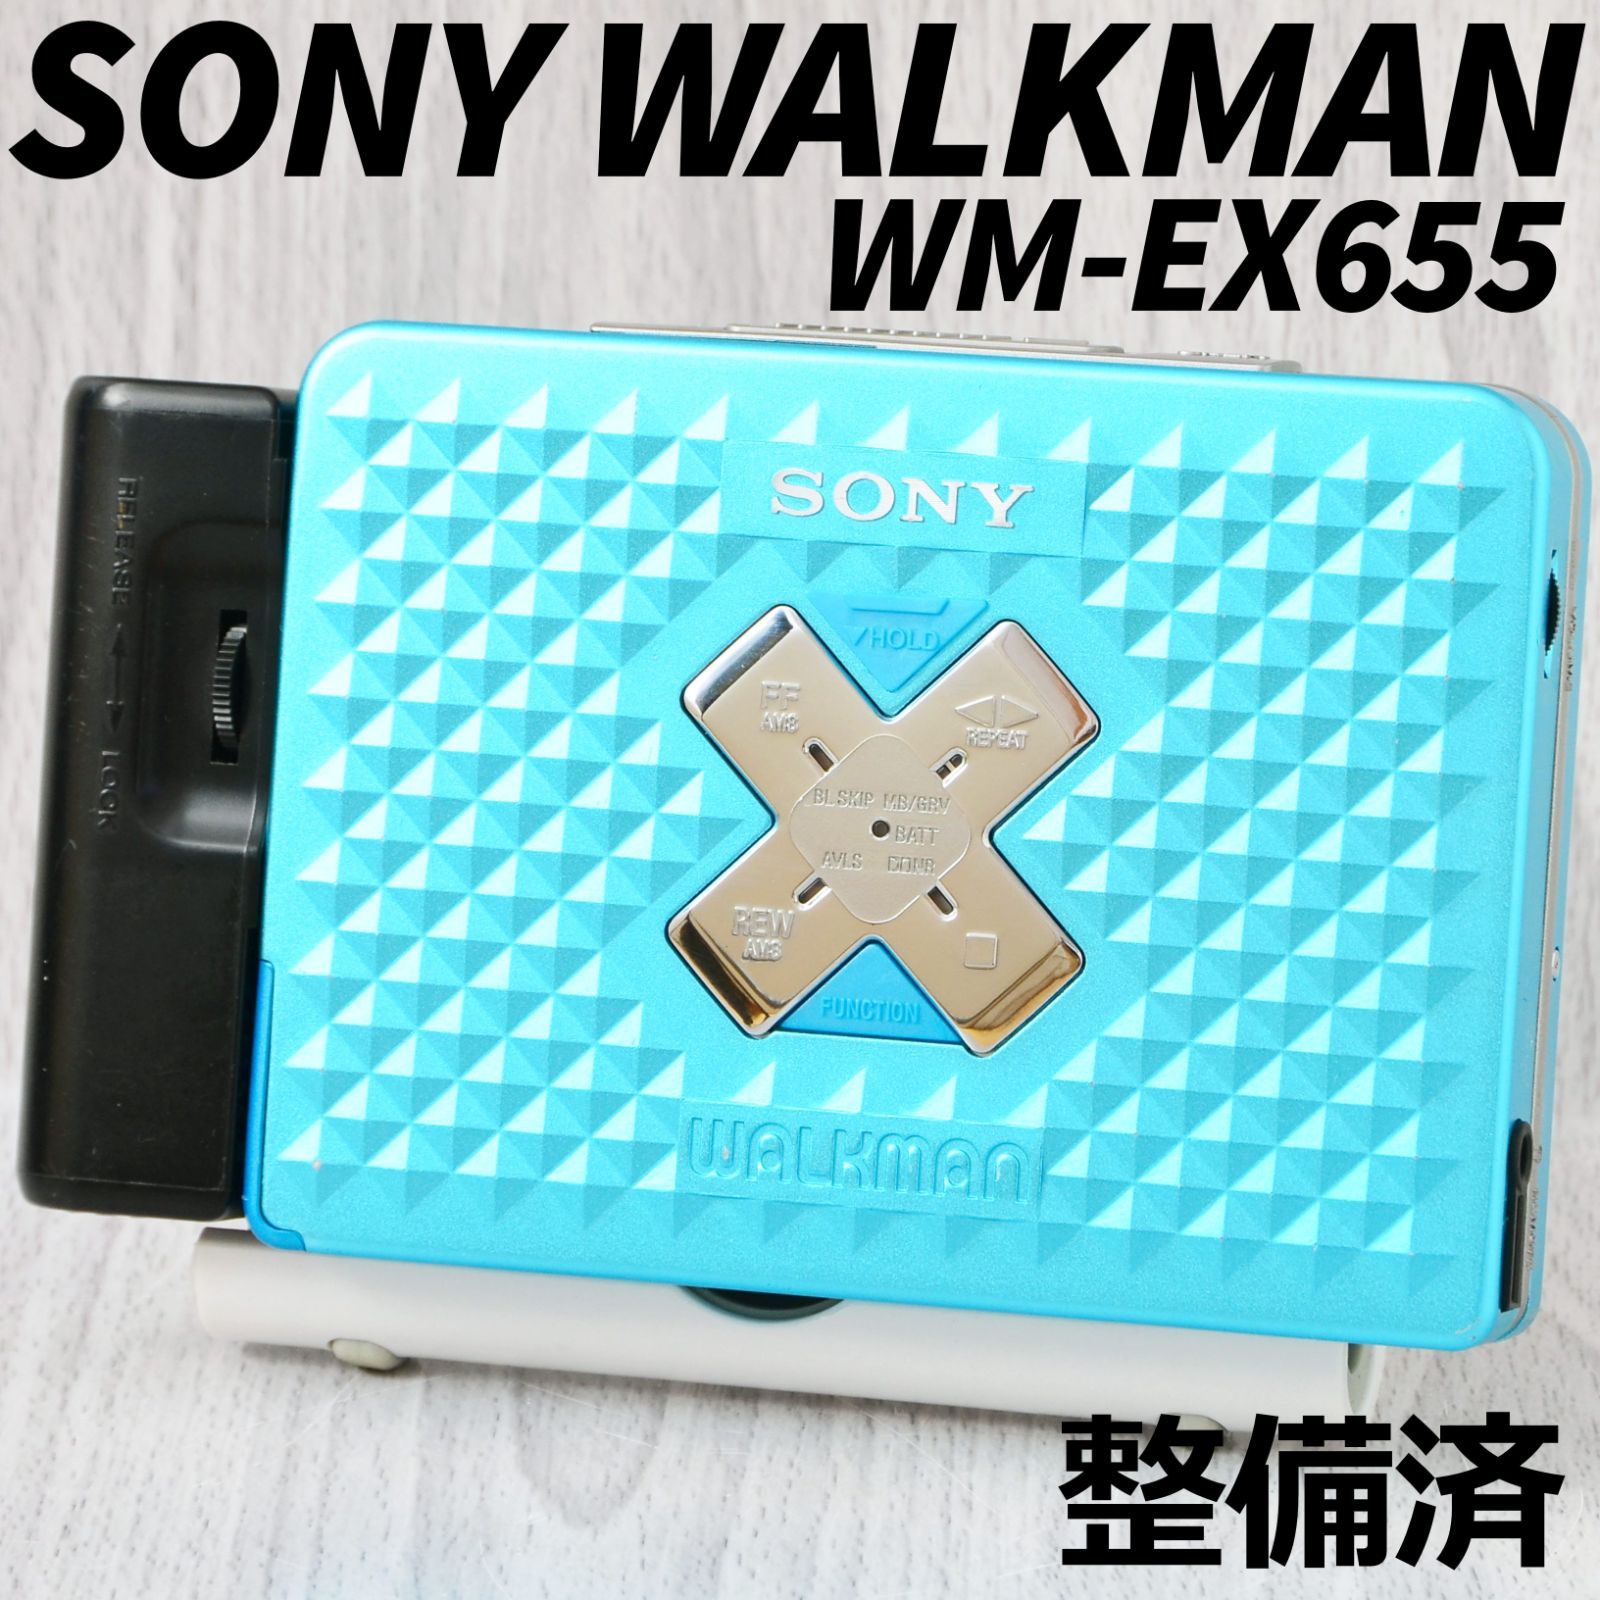 SONY WALKMAN WM-EX655 カセットウォークマン スカイブルー 整備済